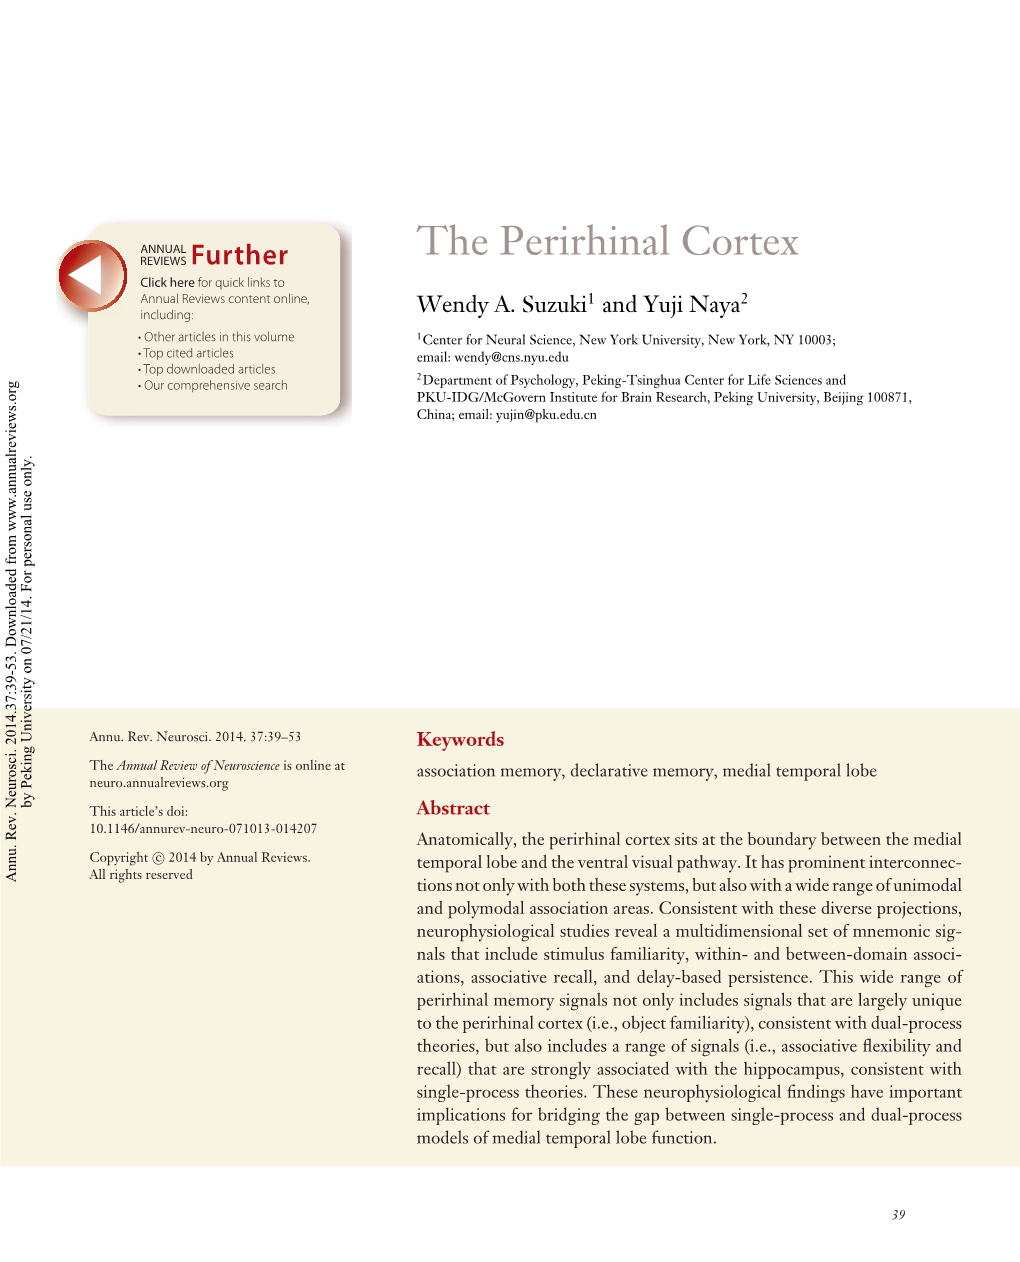 The Perirhinal Cortex